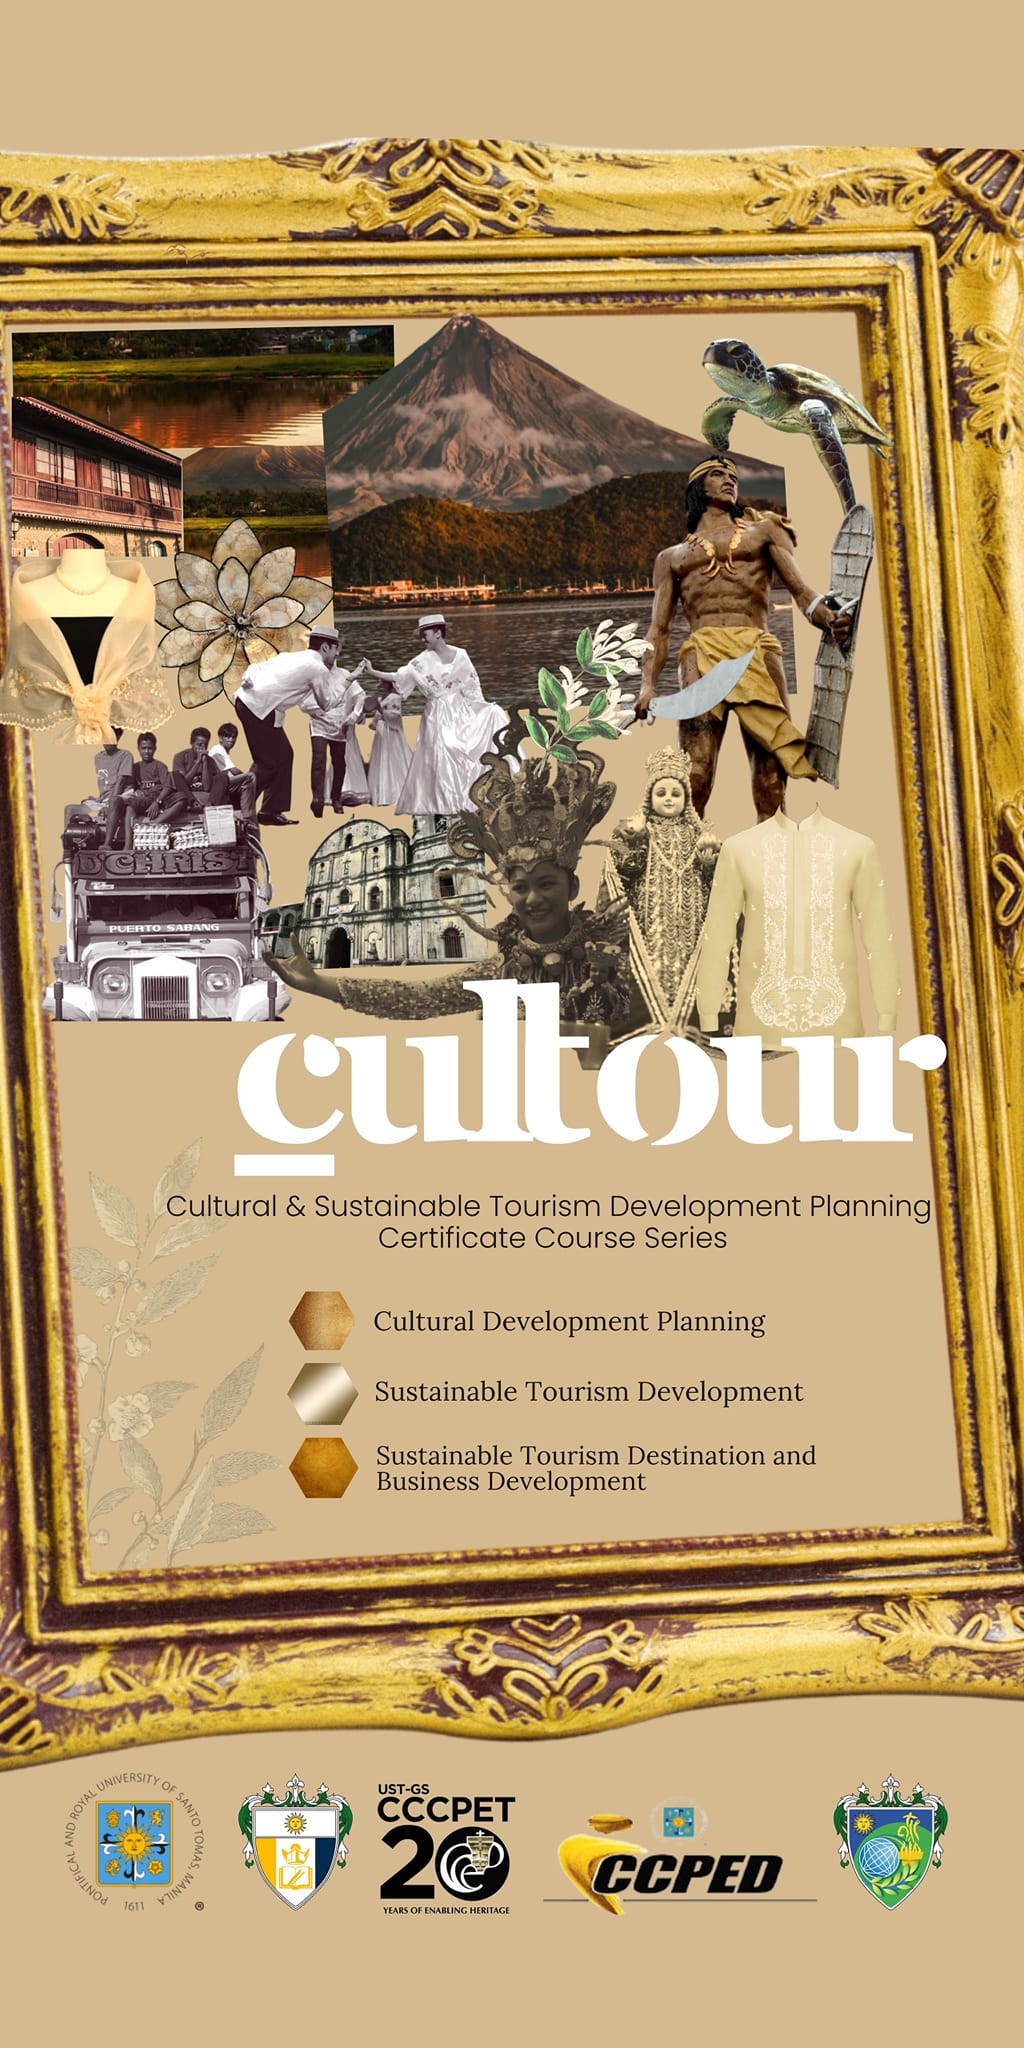 CULTOUR (Cultural & Sustainable Tourism Development Planning Certificate Course Series)